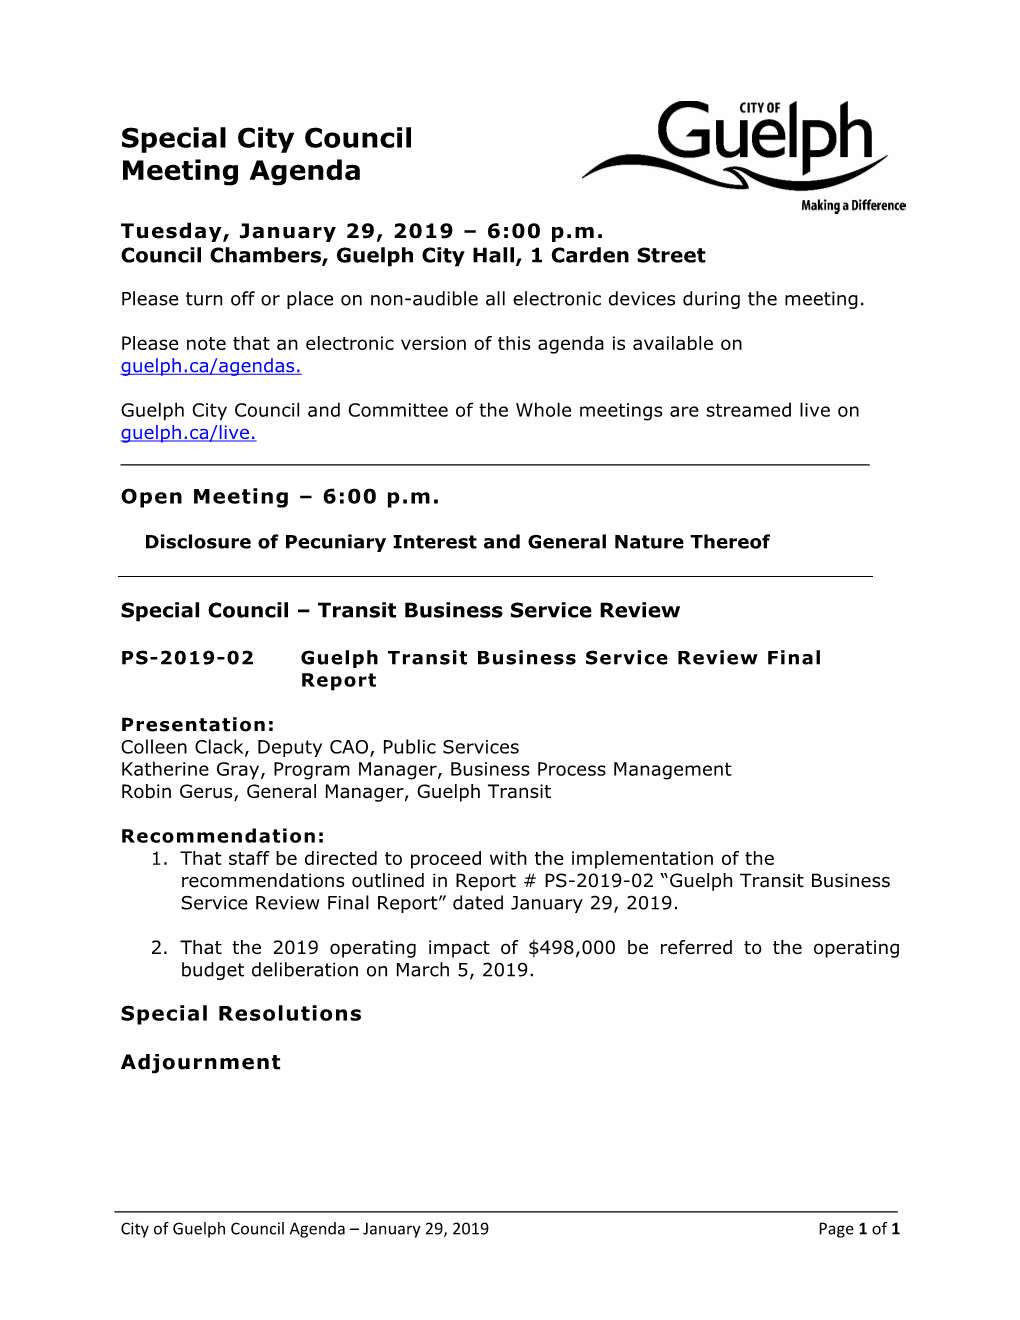 Special City Council Meeting Agenda